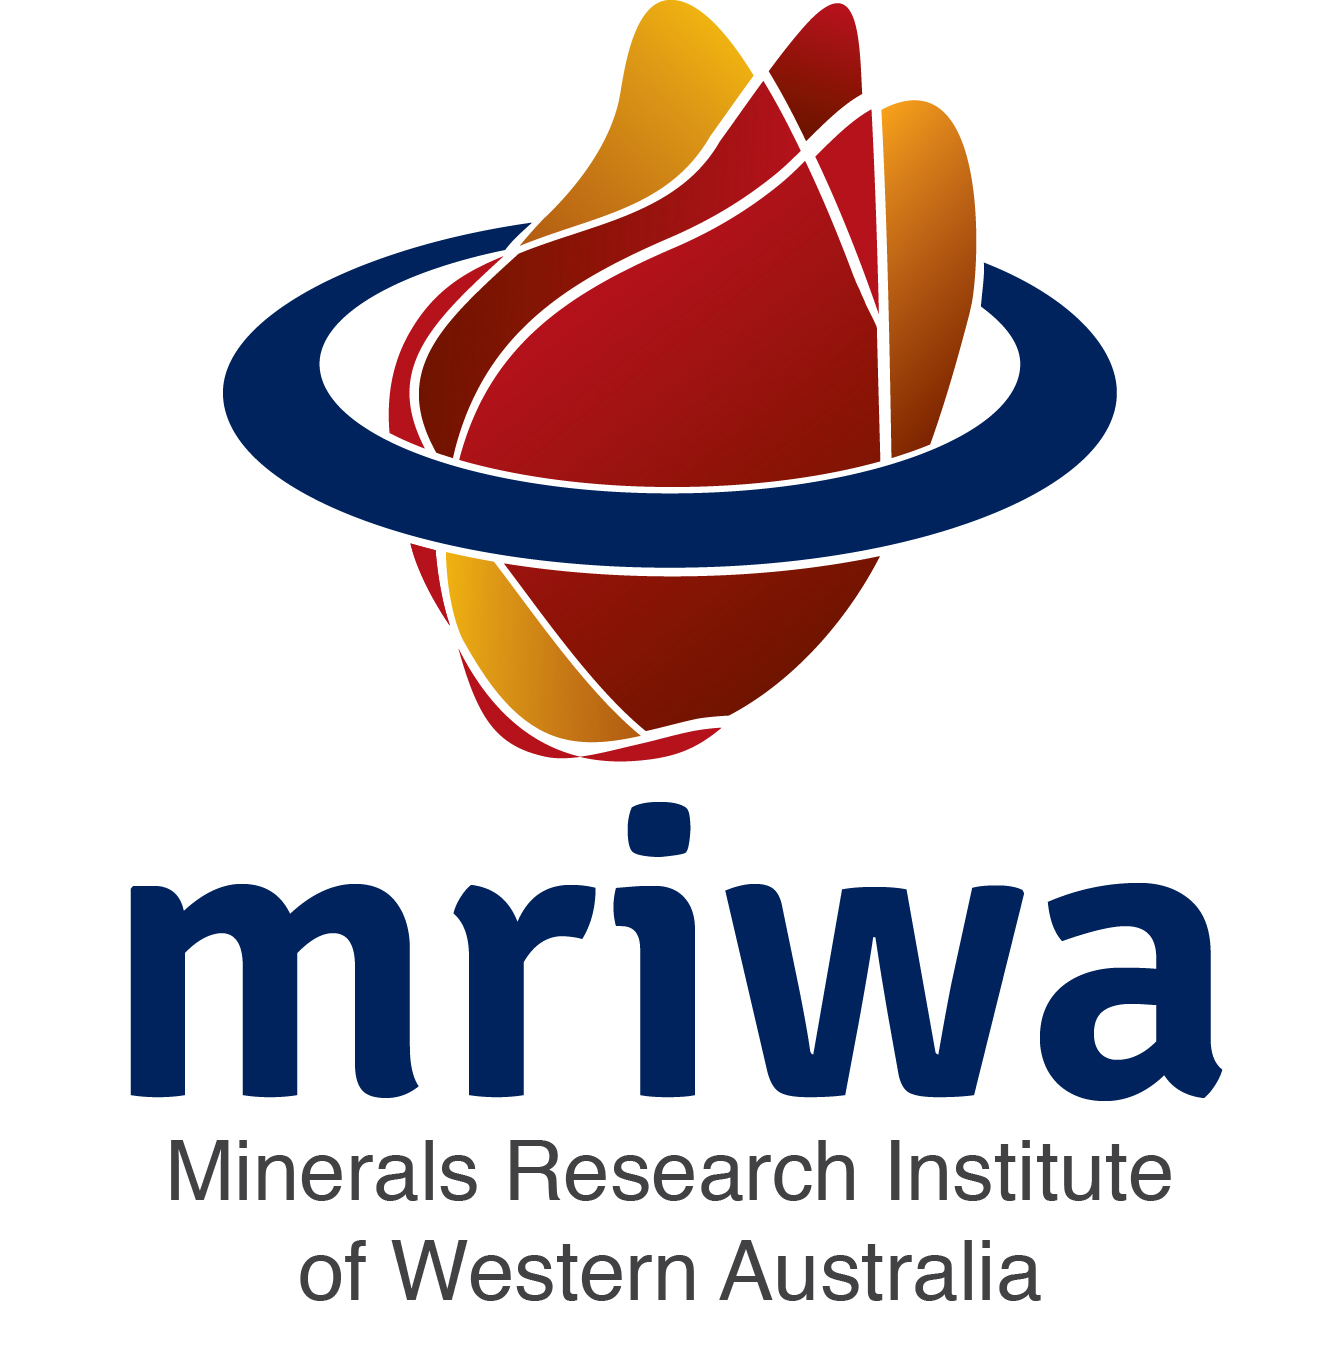 Minerals Research Institute of Western Australia flag